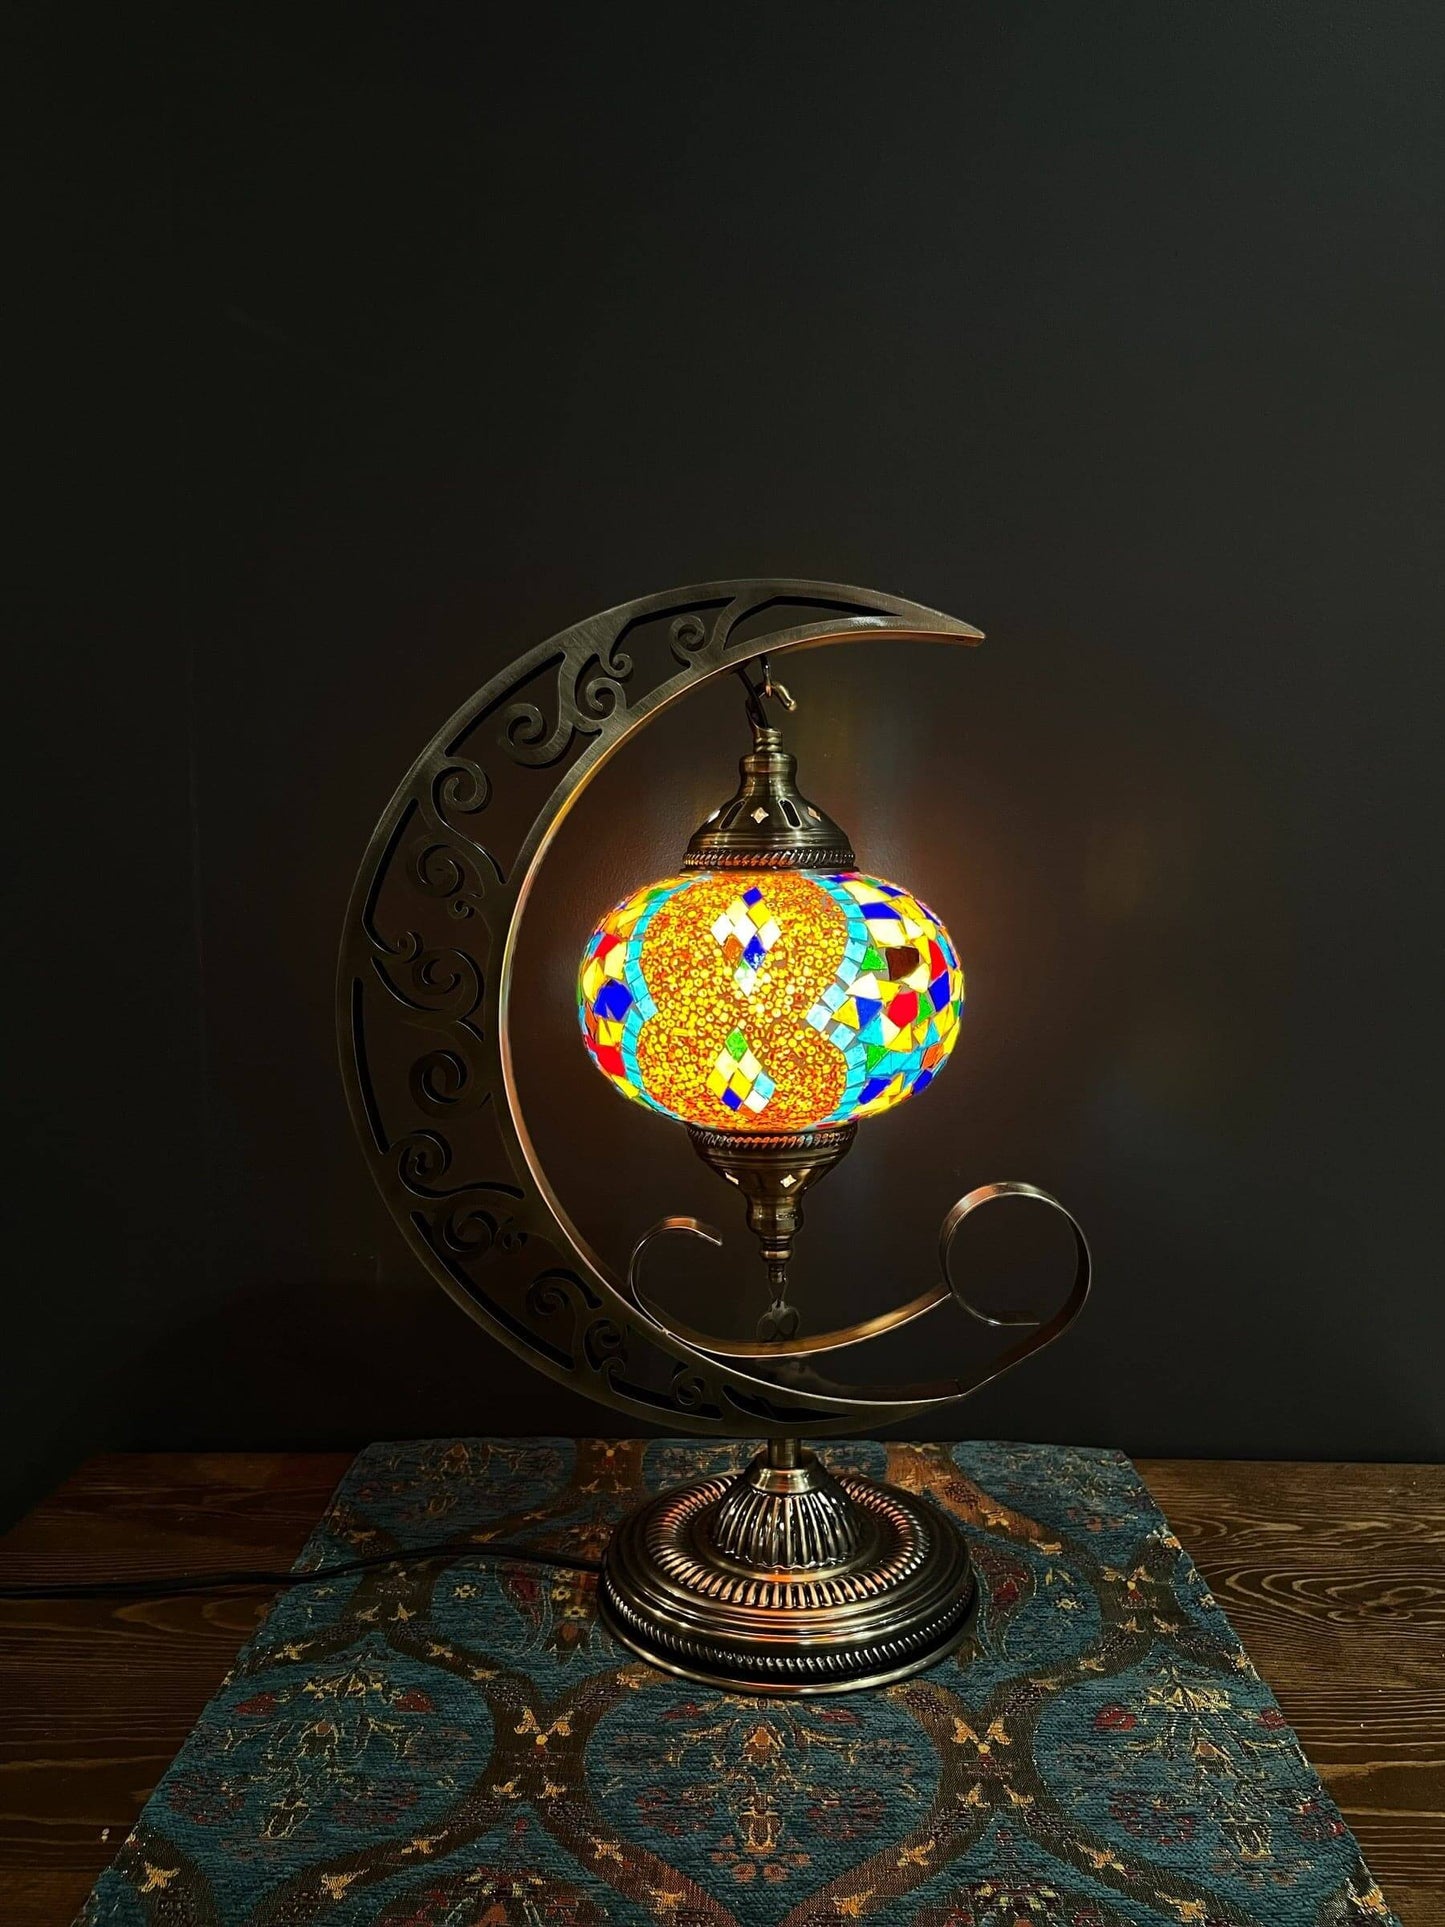 Mosaic Moon Lamp (Turkish Lamps) Orange-Rainbow